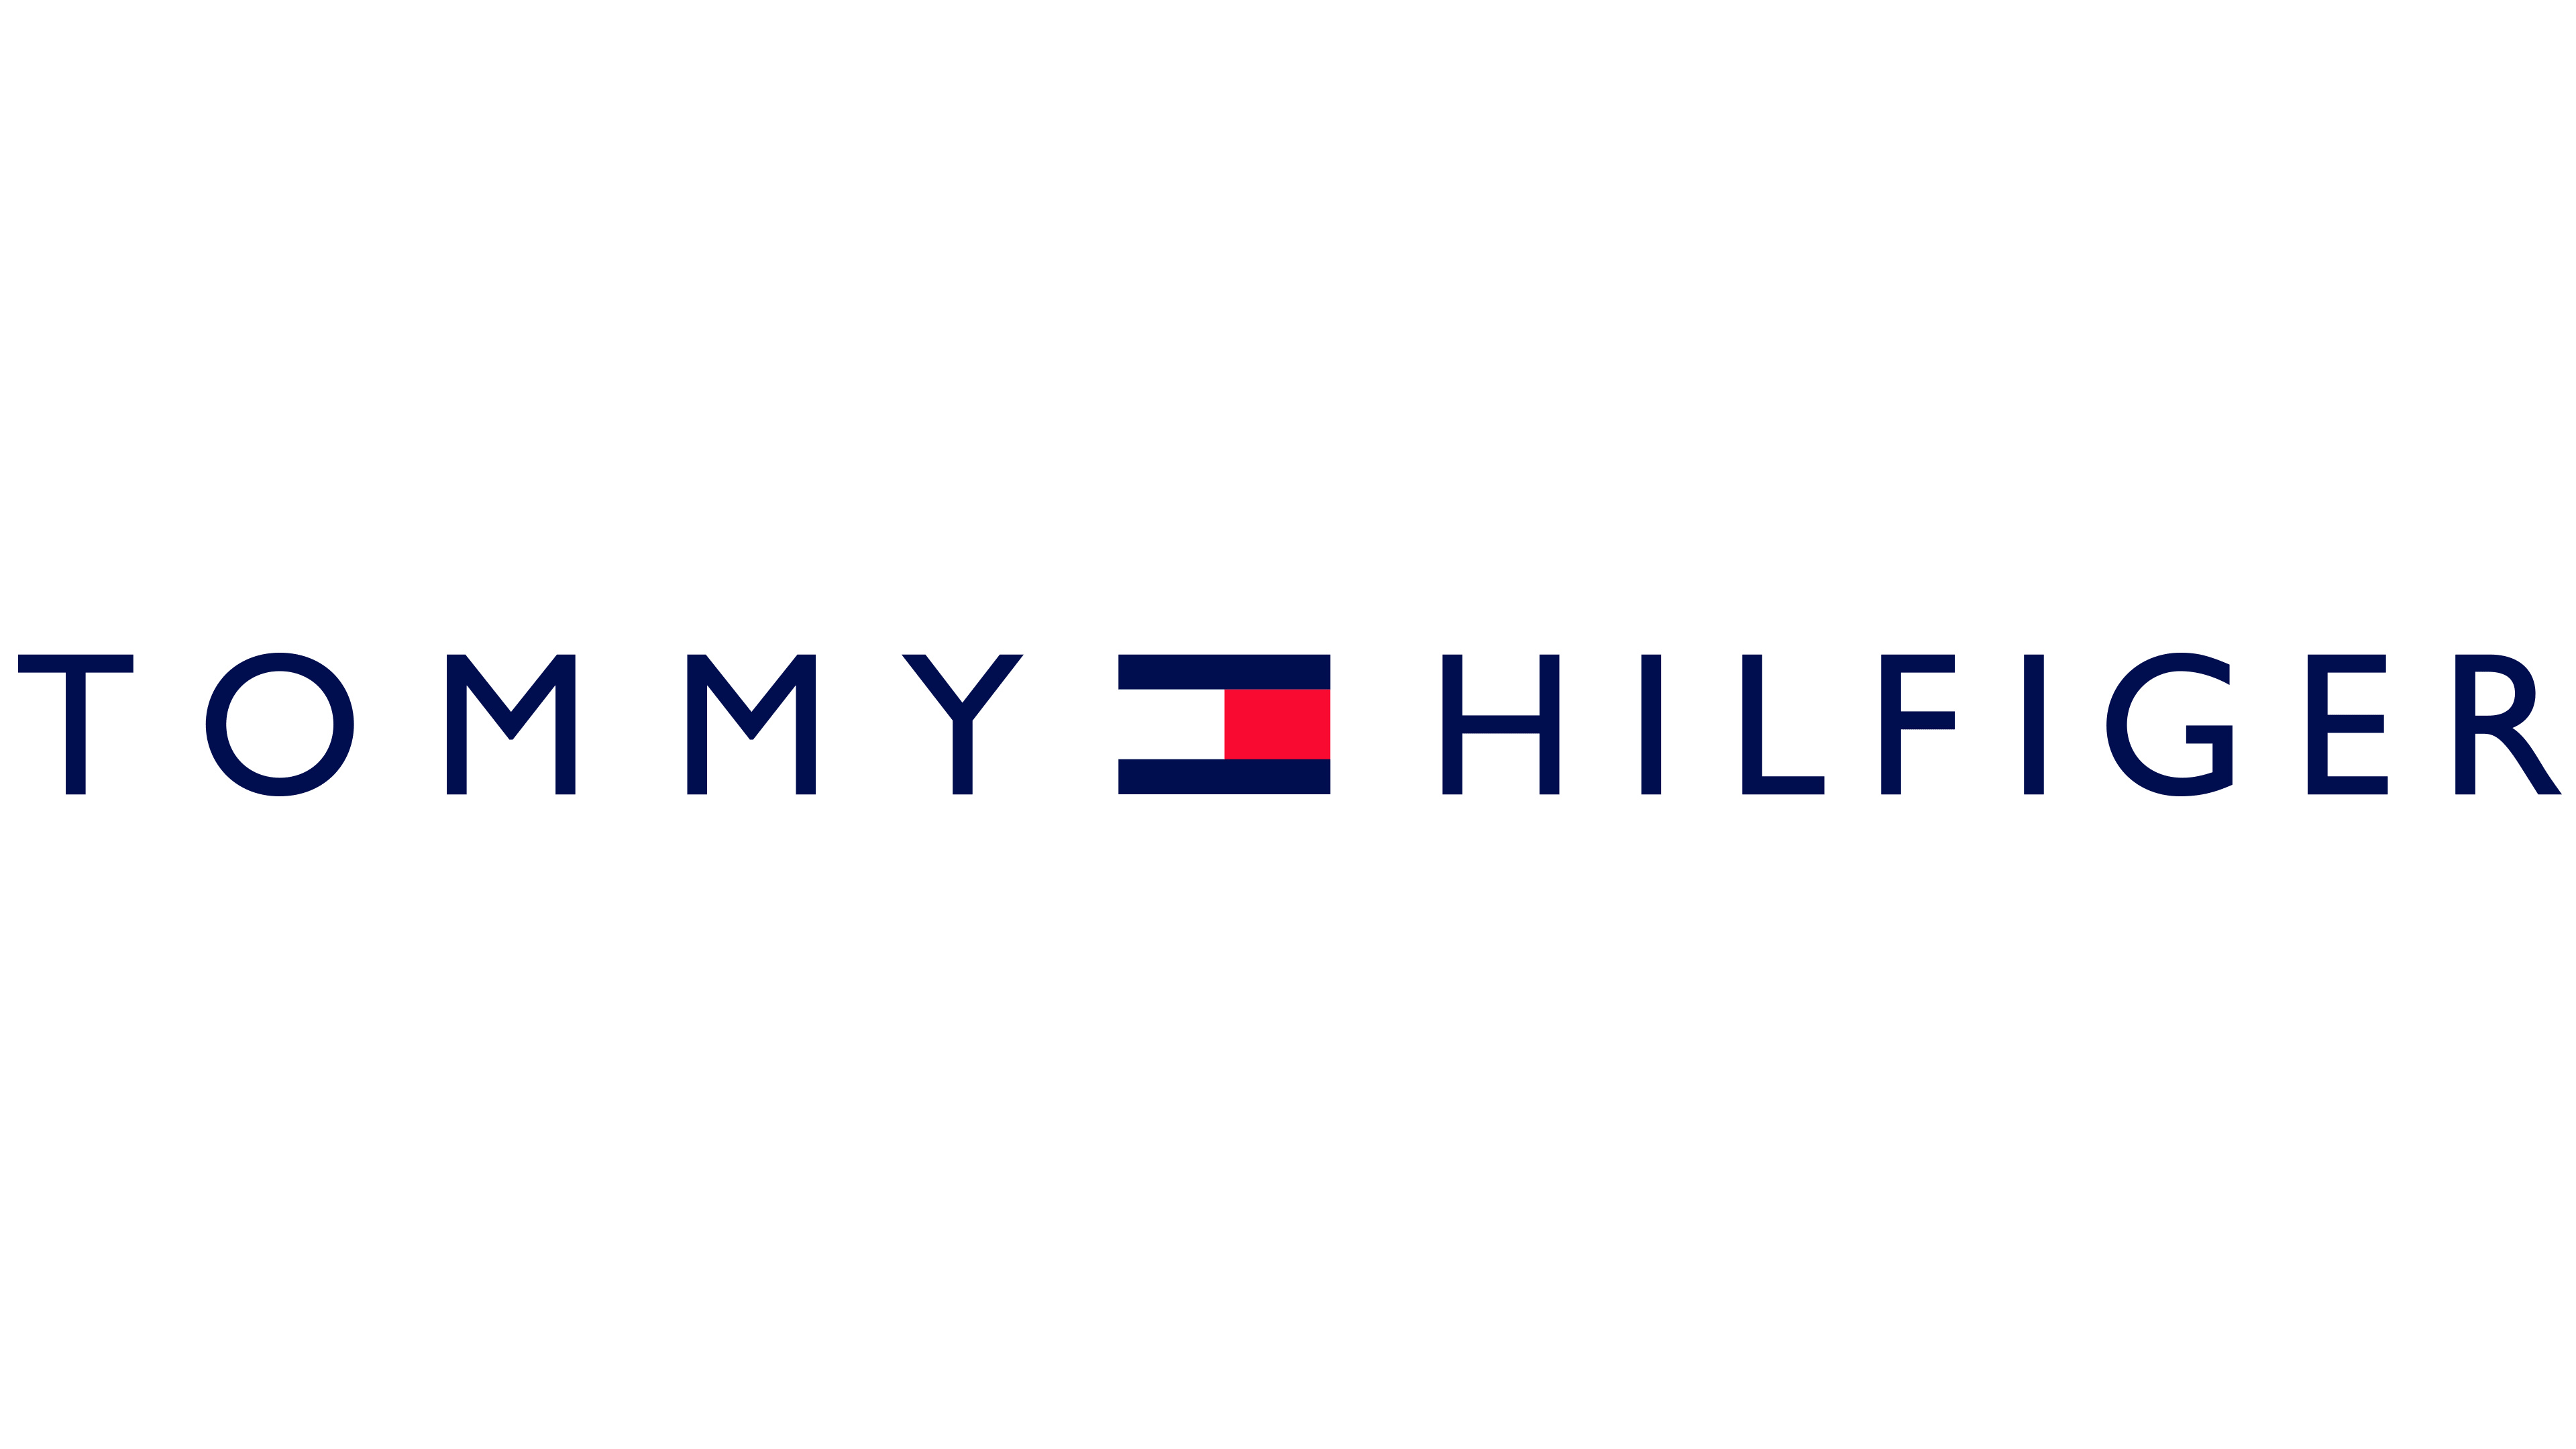 Tommy Hilfiger: An American premium clothing brand, Logo. 3840x2160 4K Background.